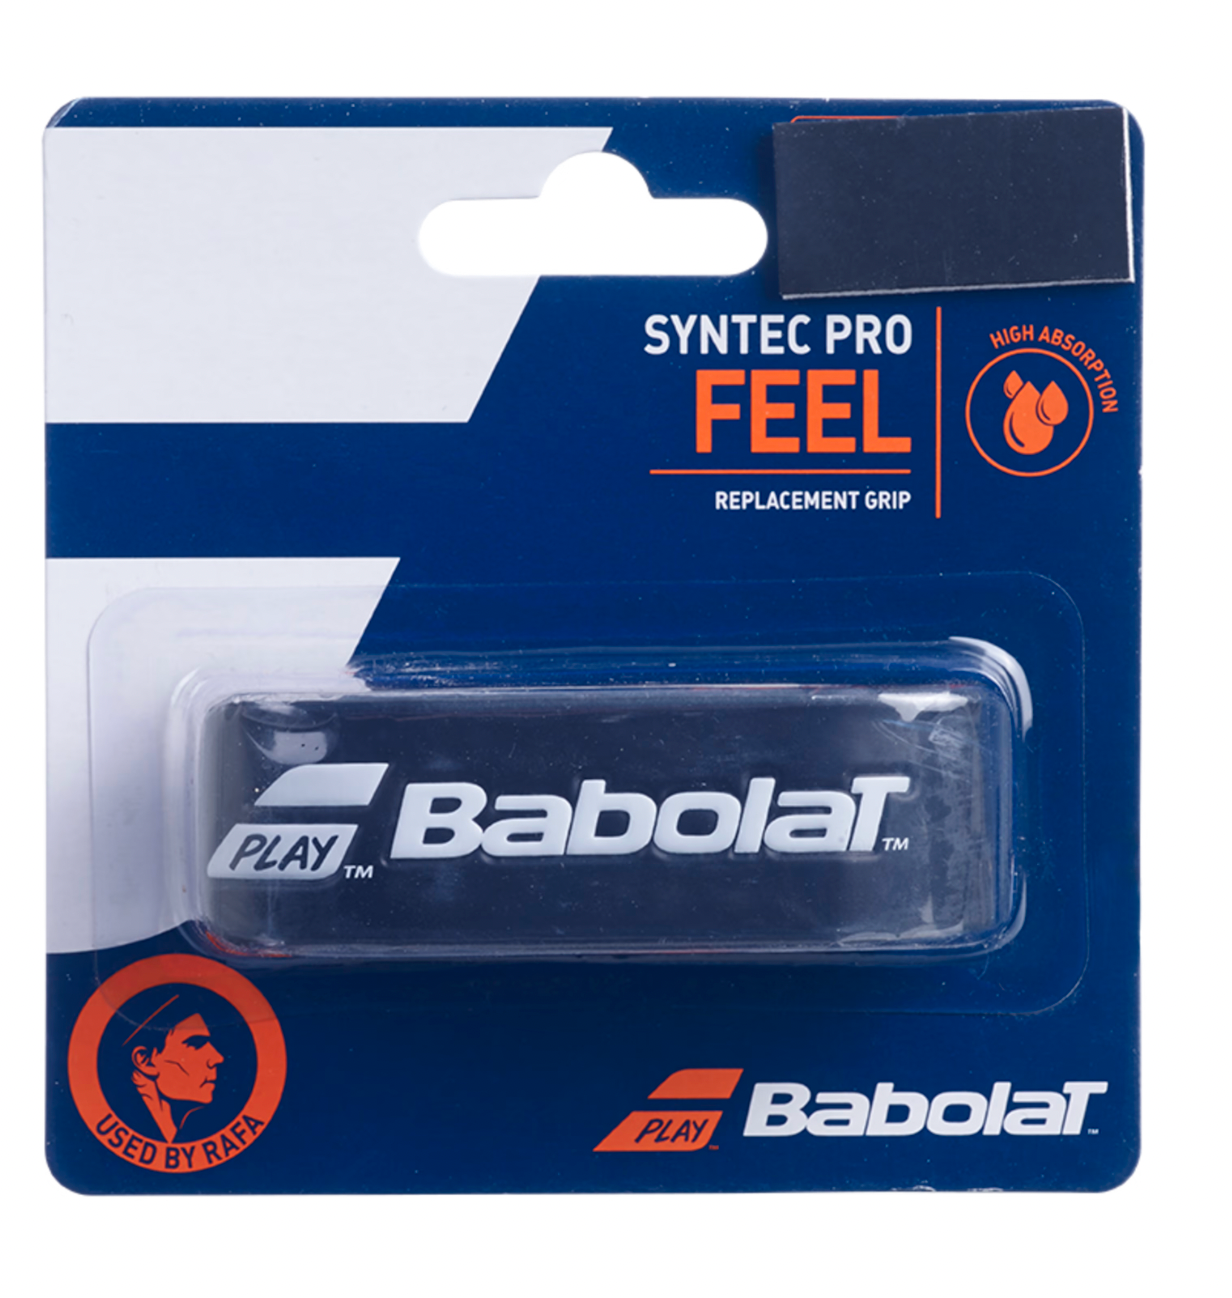 Babolat Syntec Pro Tennis Replacement grip